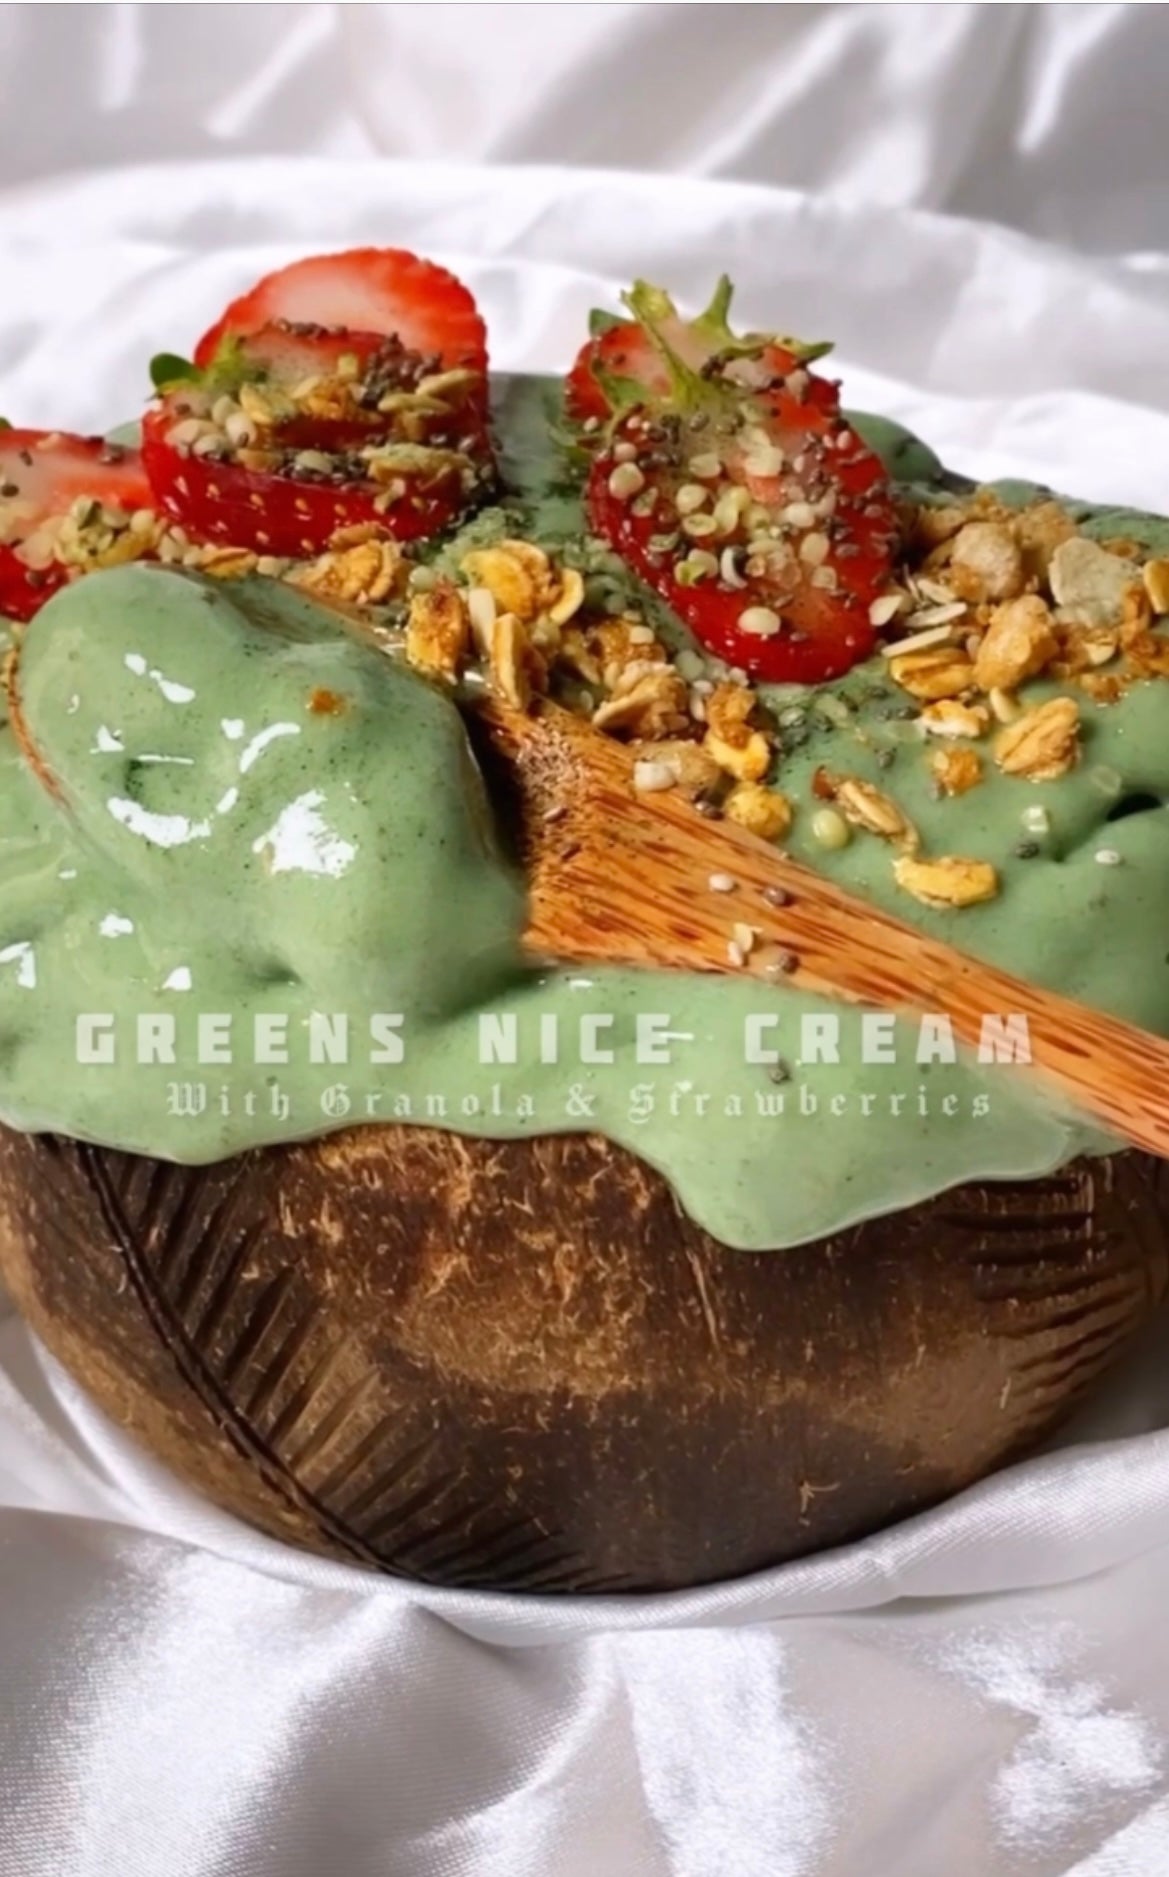 Greens Nice Cream with Granola & Strawberries coconut bowl